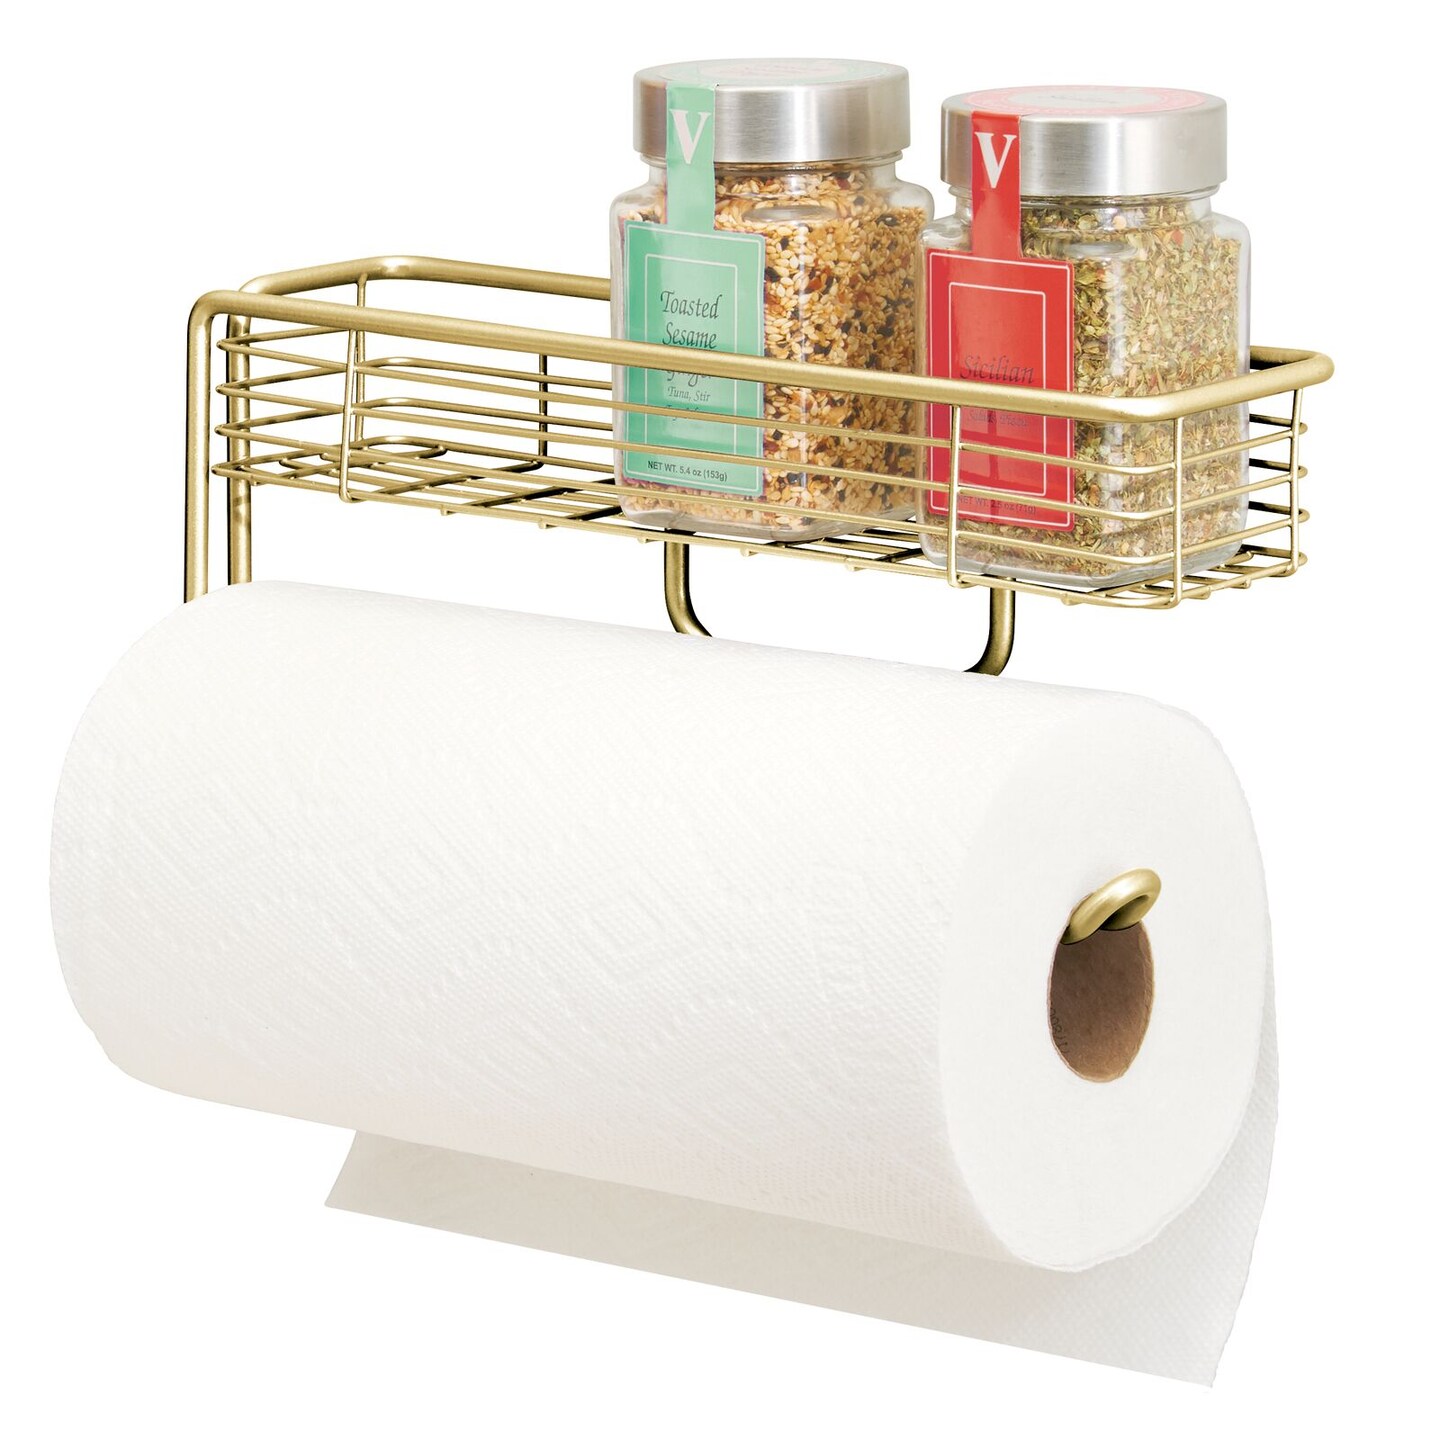 mDesign Plastic Wall Mount / Under Cabinet Paper Towel Holder - White